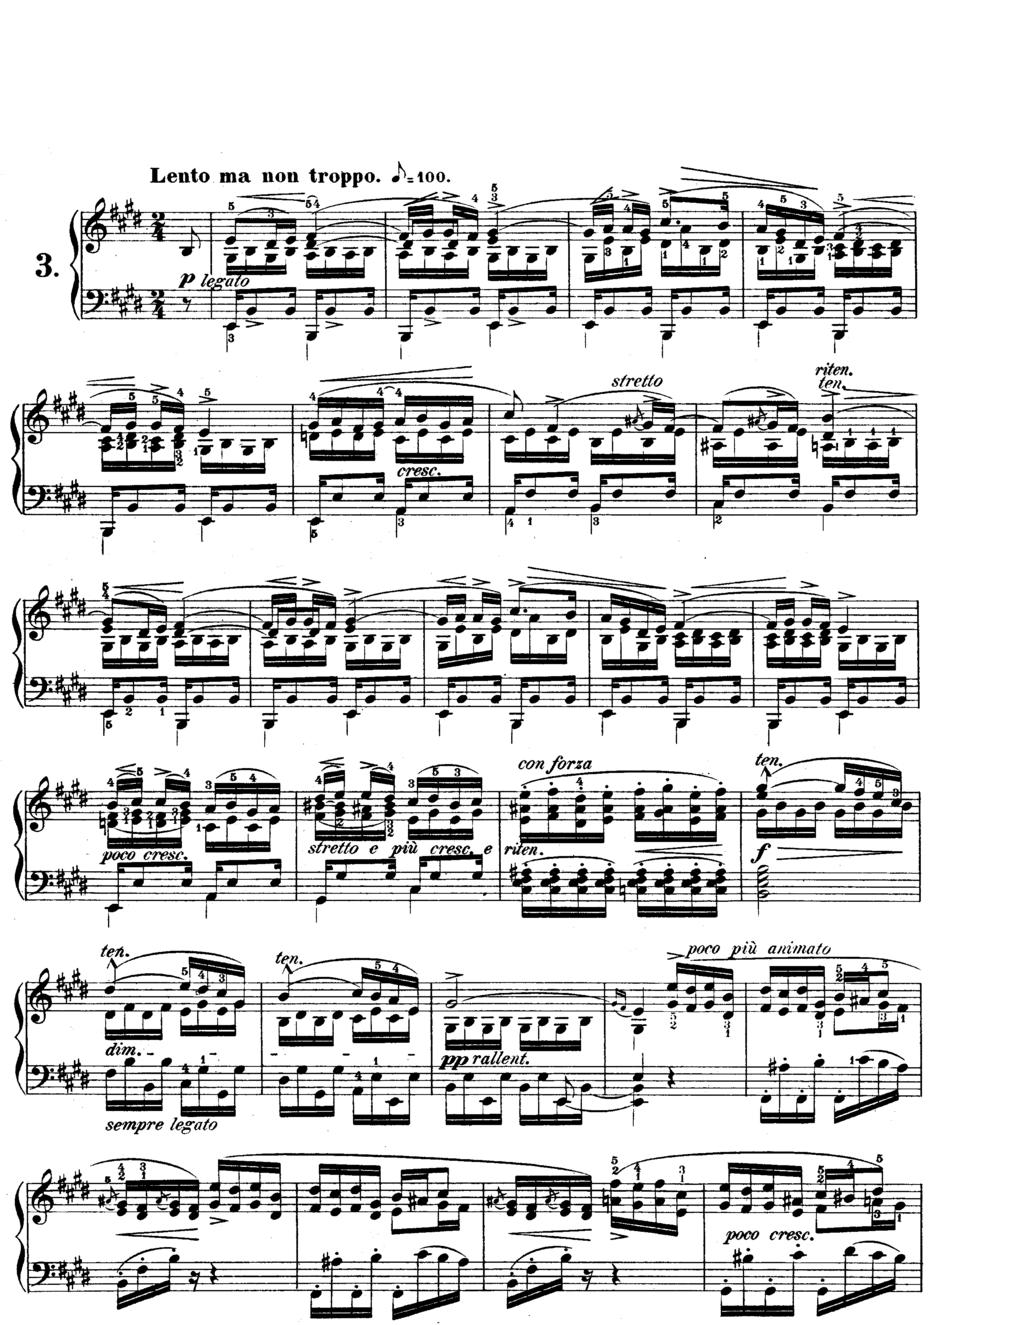 Example: Chopin